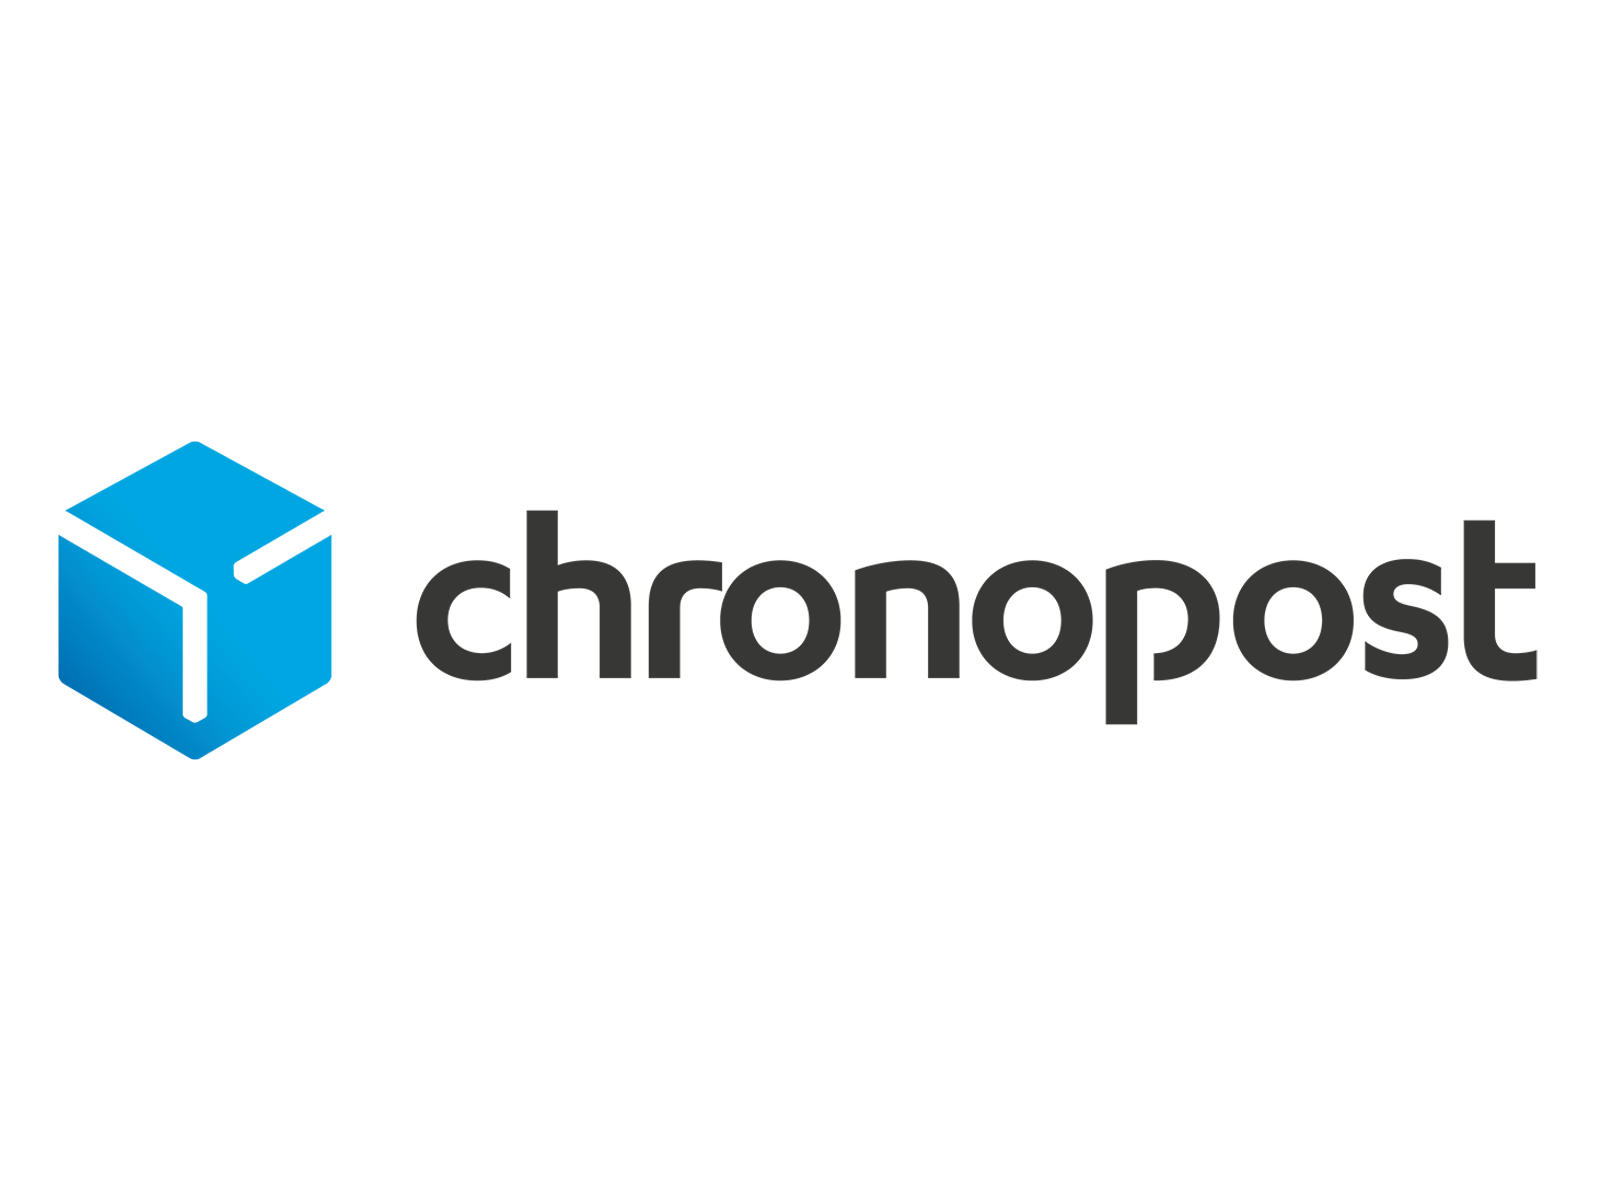 Chronopost logo